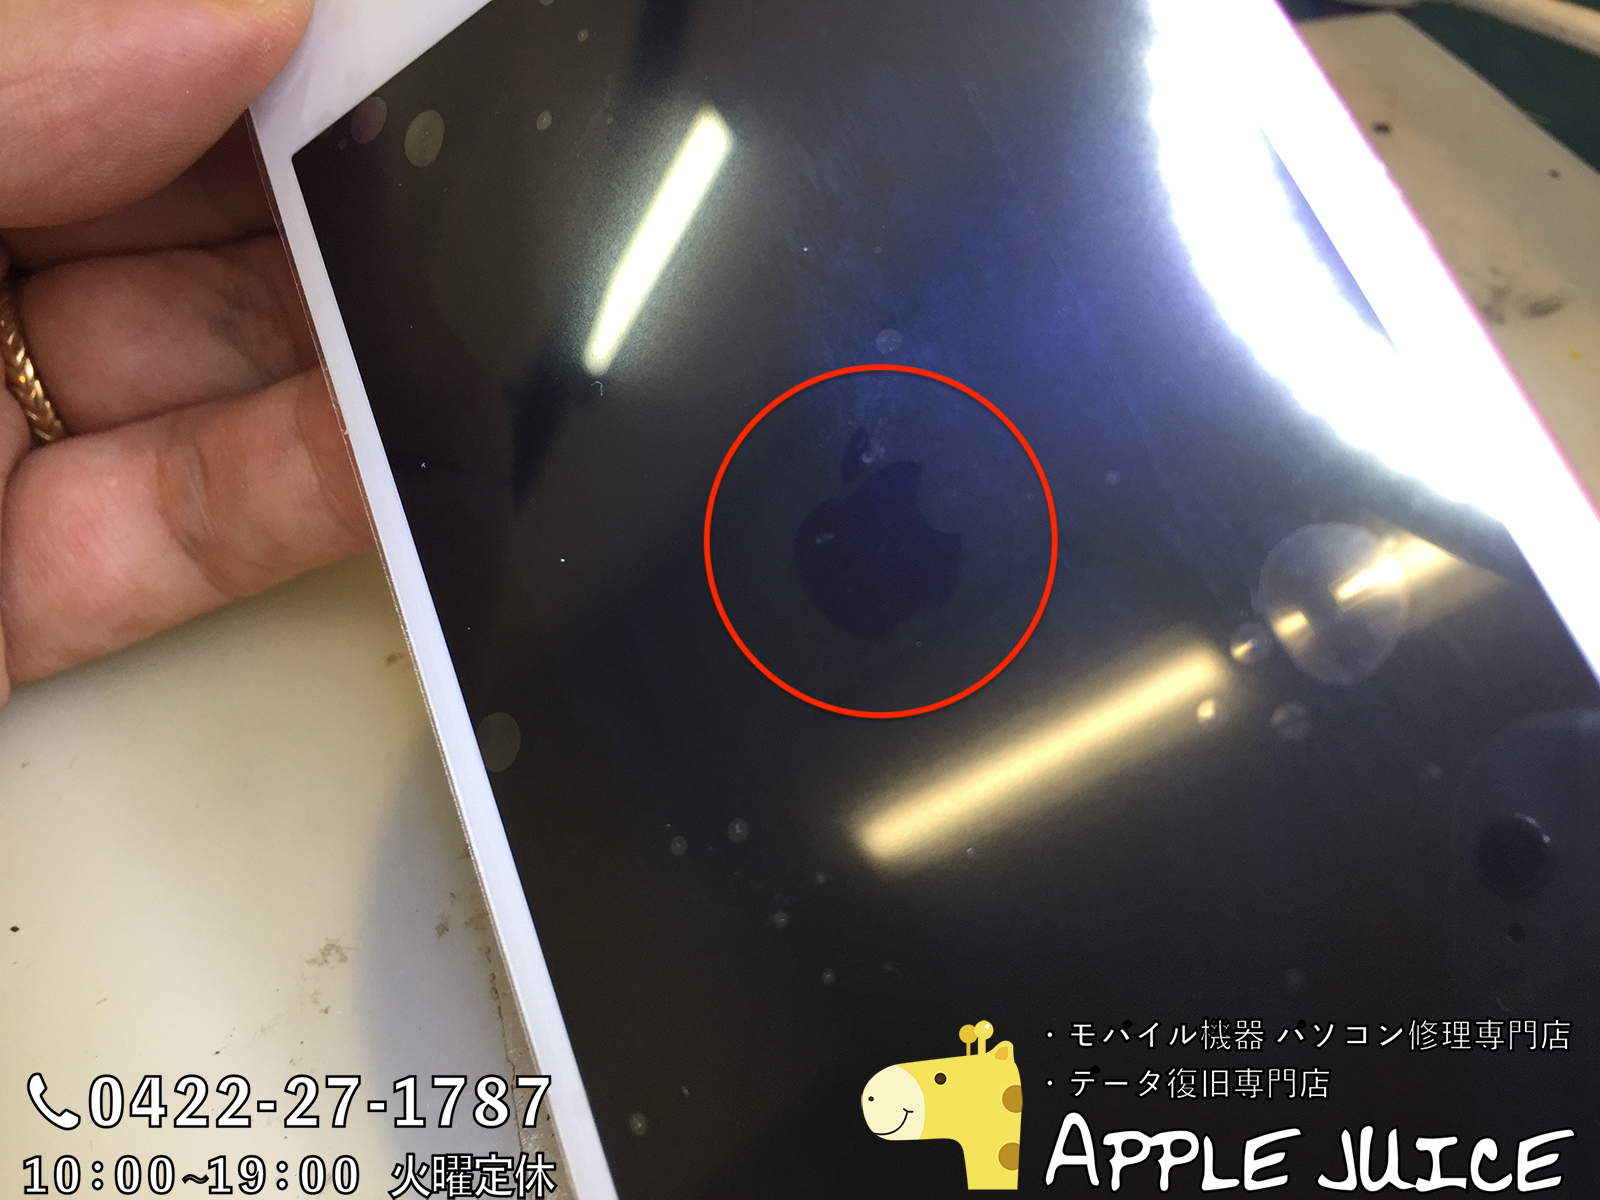 Iphone6sで修理後画面が映らない場合 バックライト発光不良 基板修理で修理可能 Iphone Ipad Ipod Mac修理 データ復旧 基板修理 Applejuice吉祥寺店